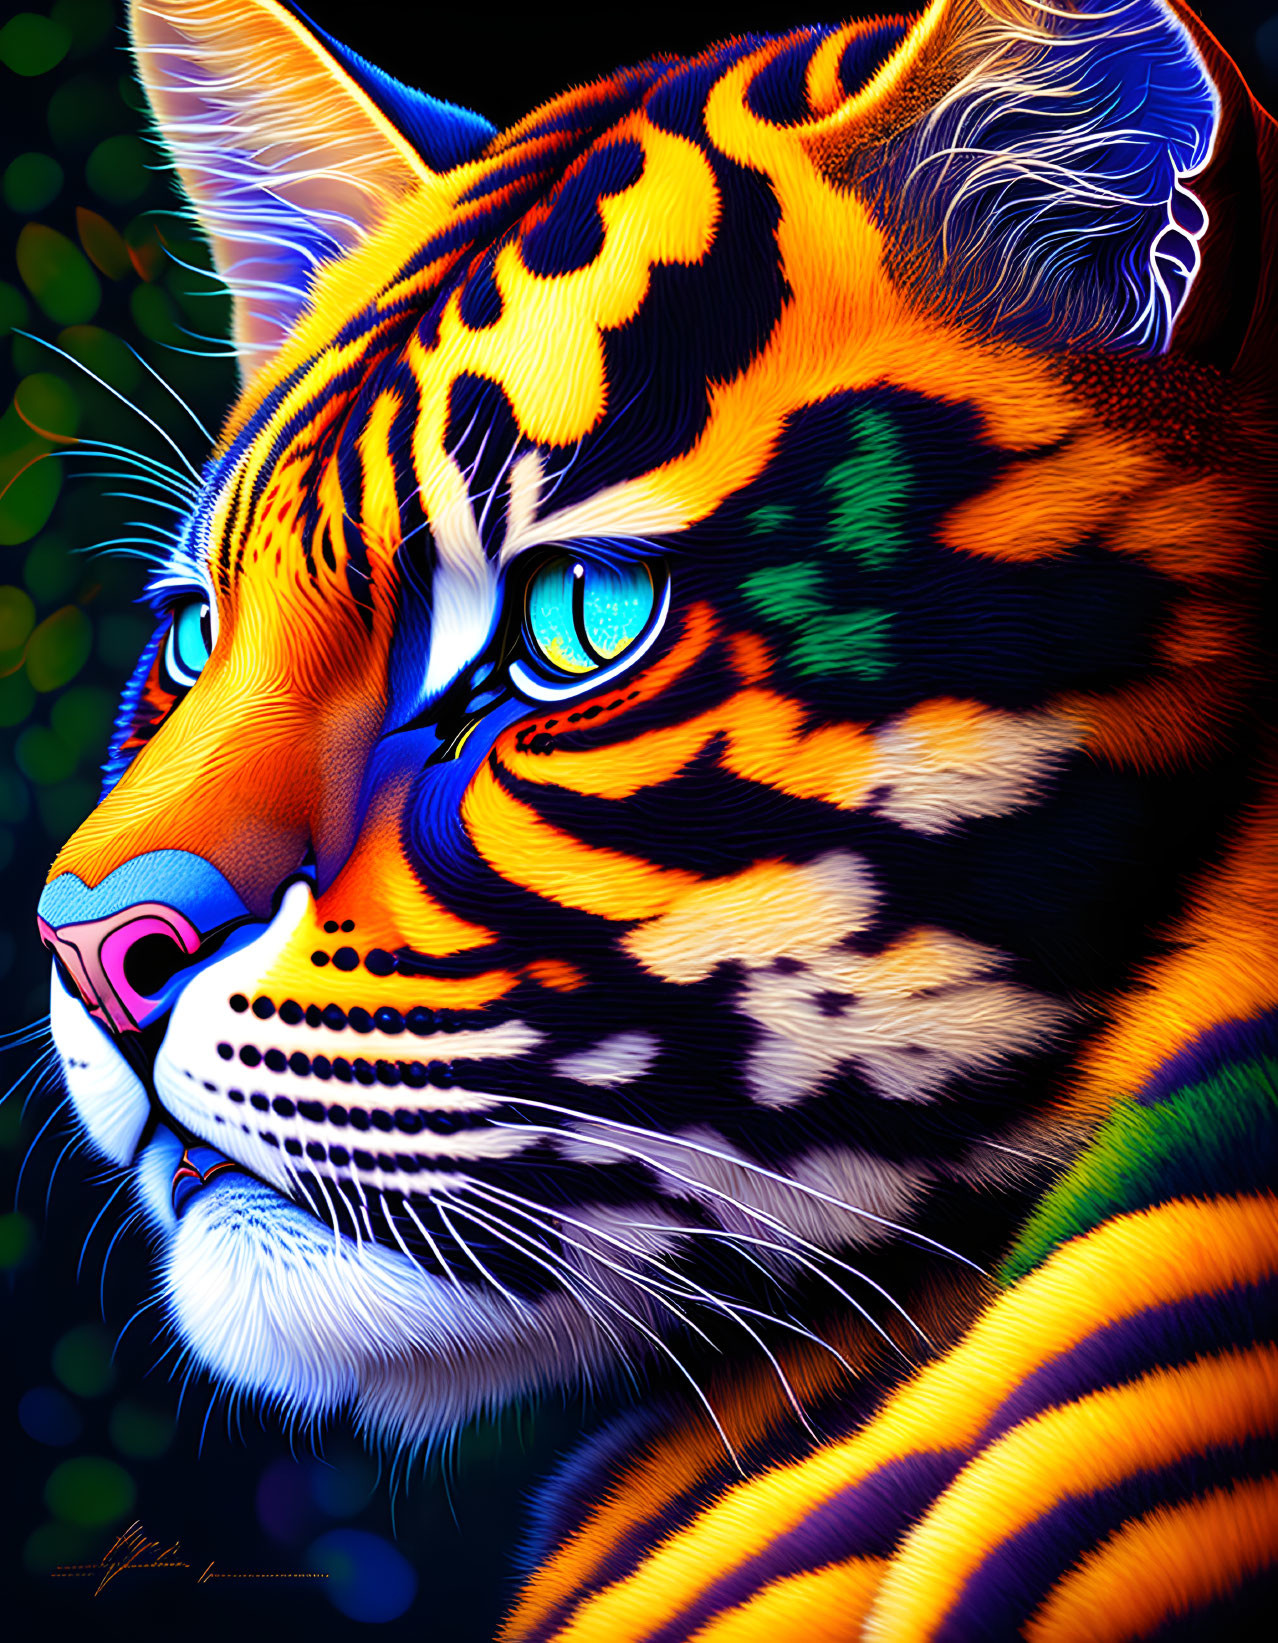 Vibrant tiger digital art with blue eyes on dark foliage